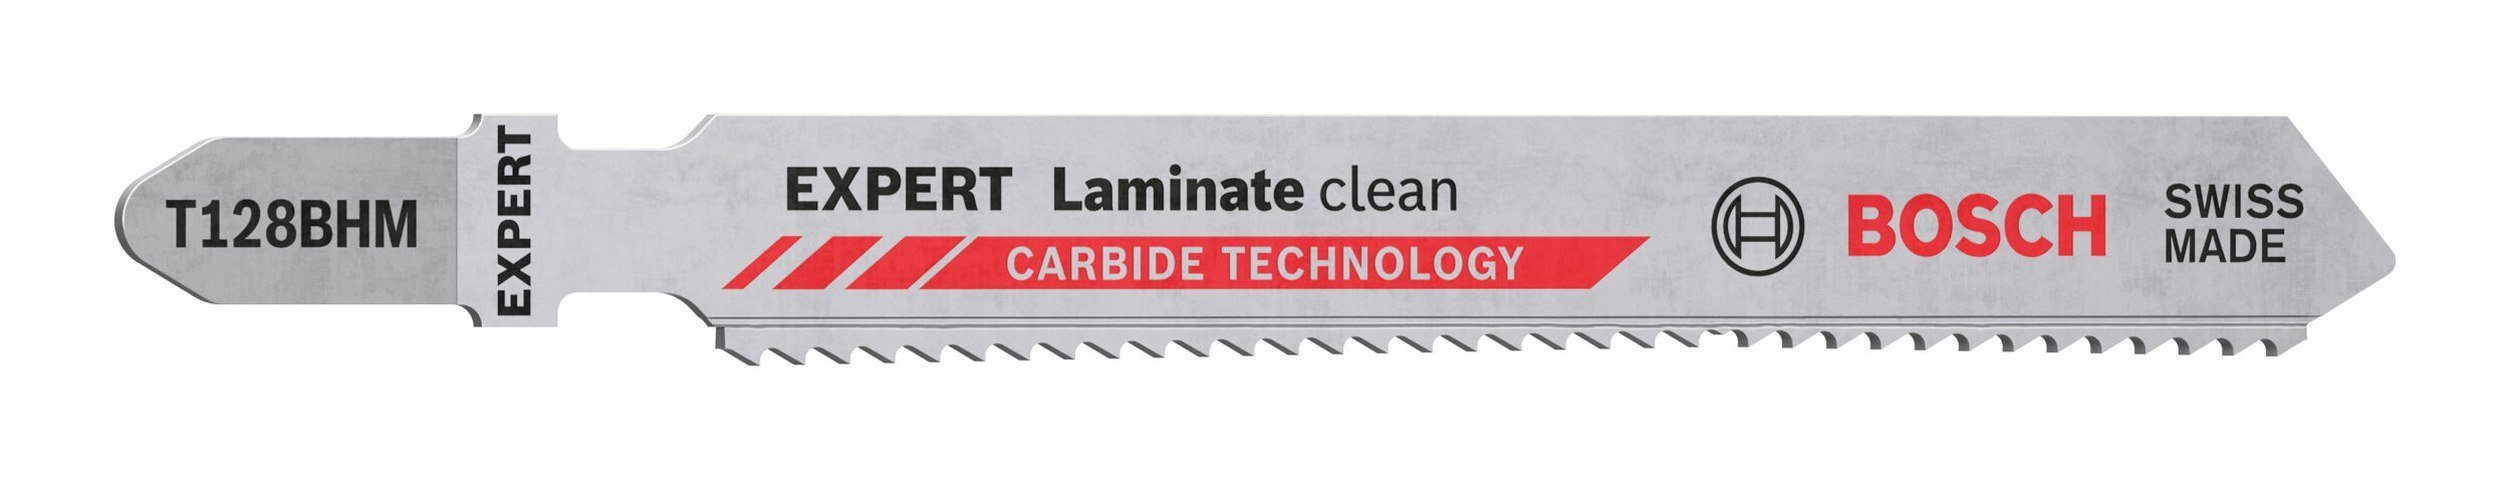 BOSCH Stichsägeblatt Expert Laminate Clean, Expert "Laminate Clean" T128 BHM, 3 Stück für Stichsägen